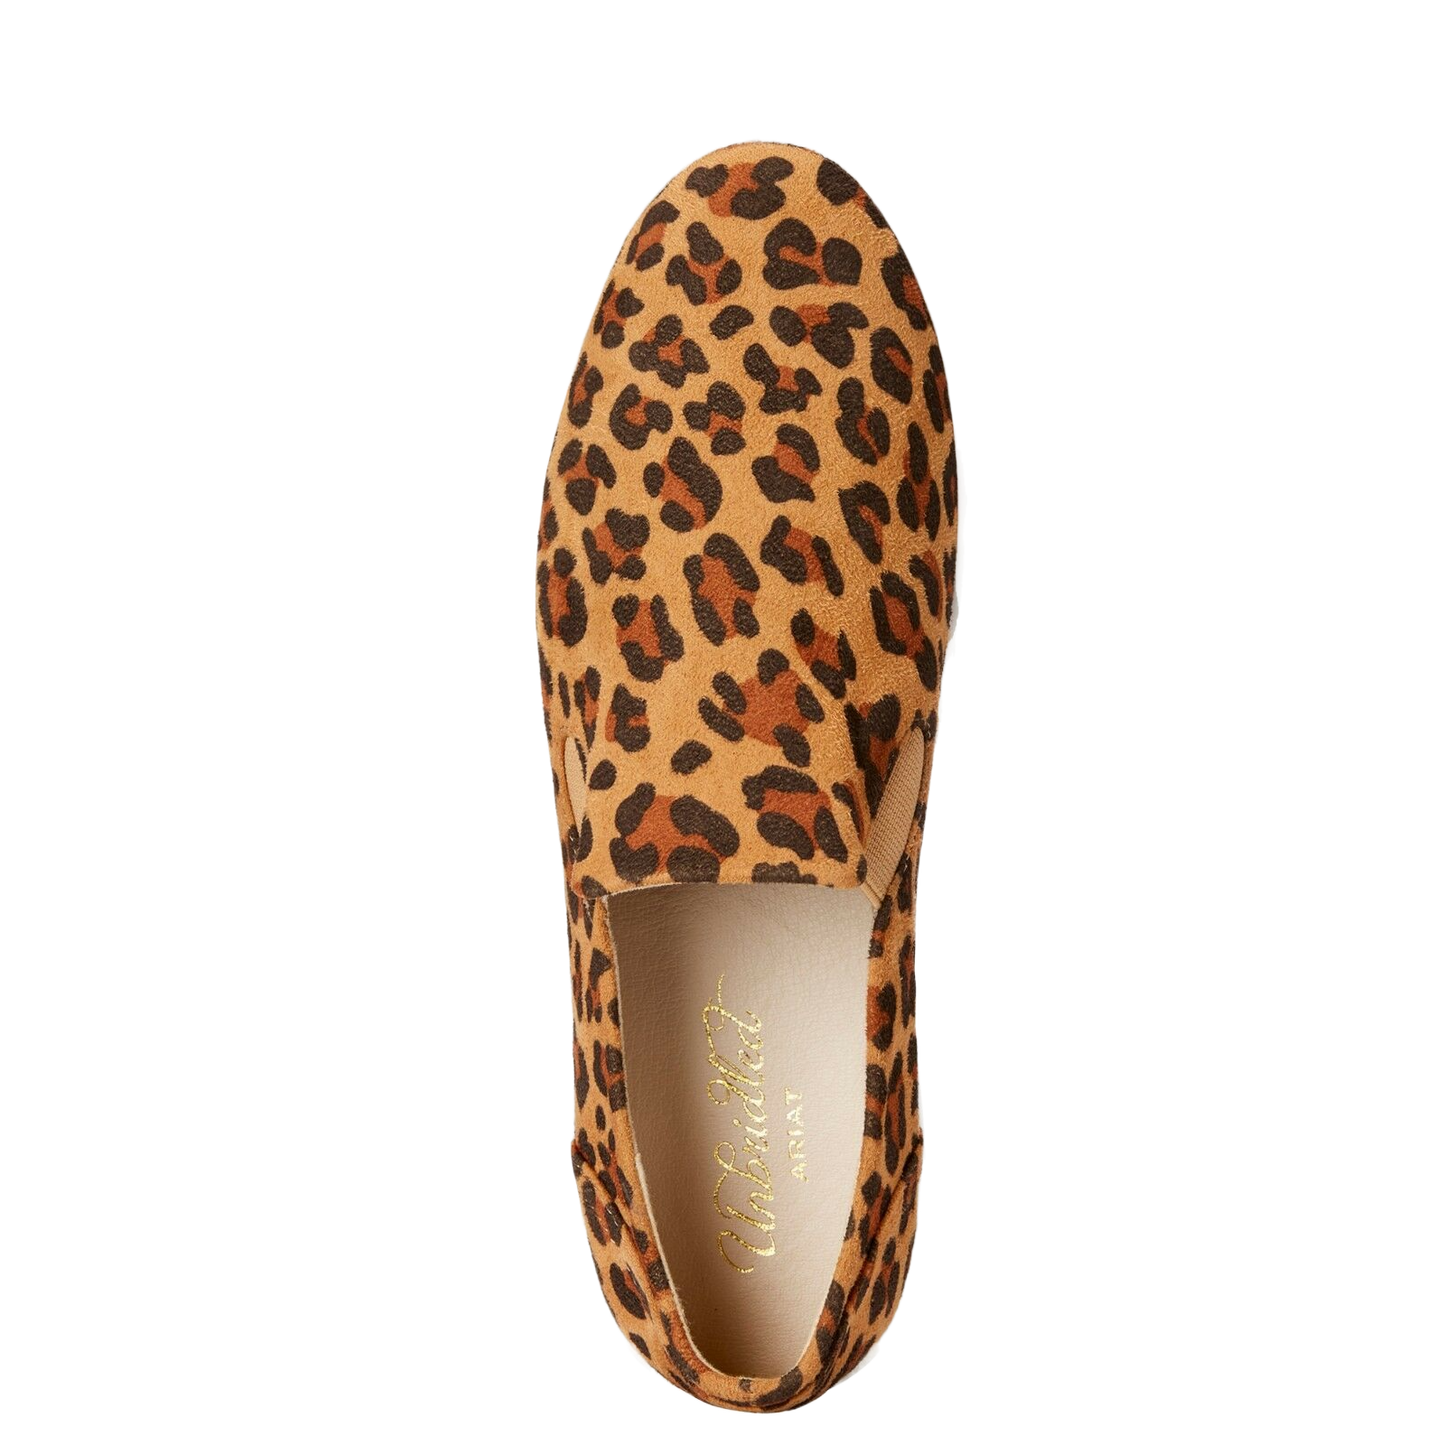 Ariat® Ladies Unbridled Ace Leopard Brown Suede Shoes 10022994